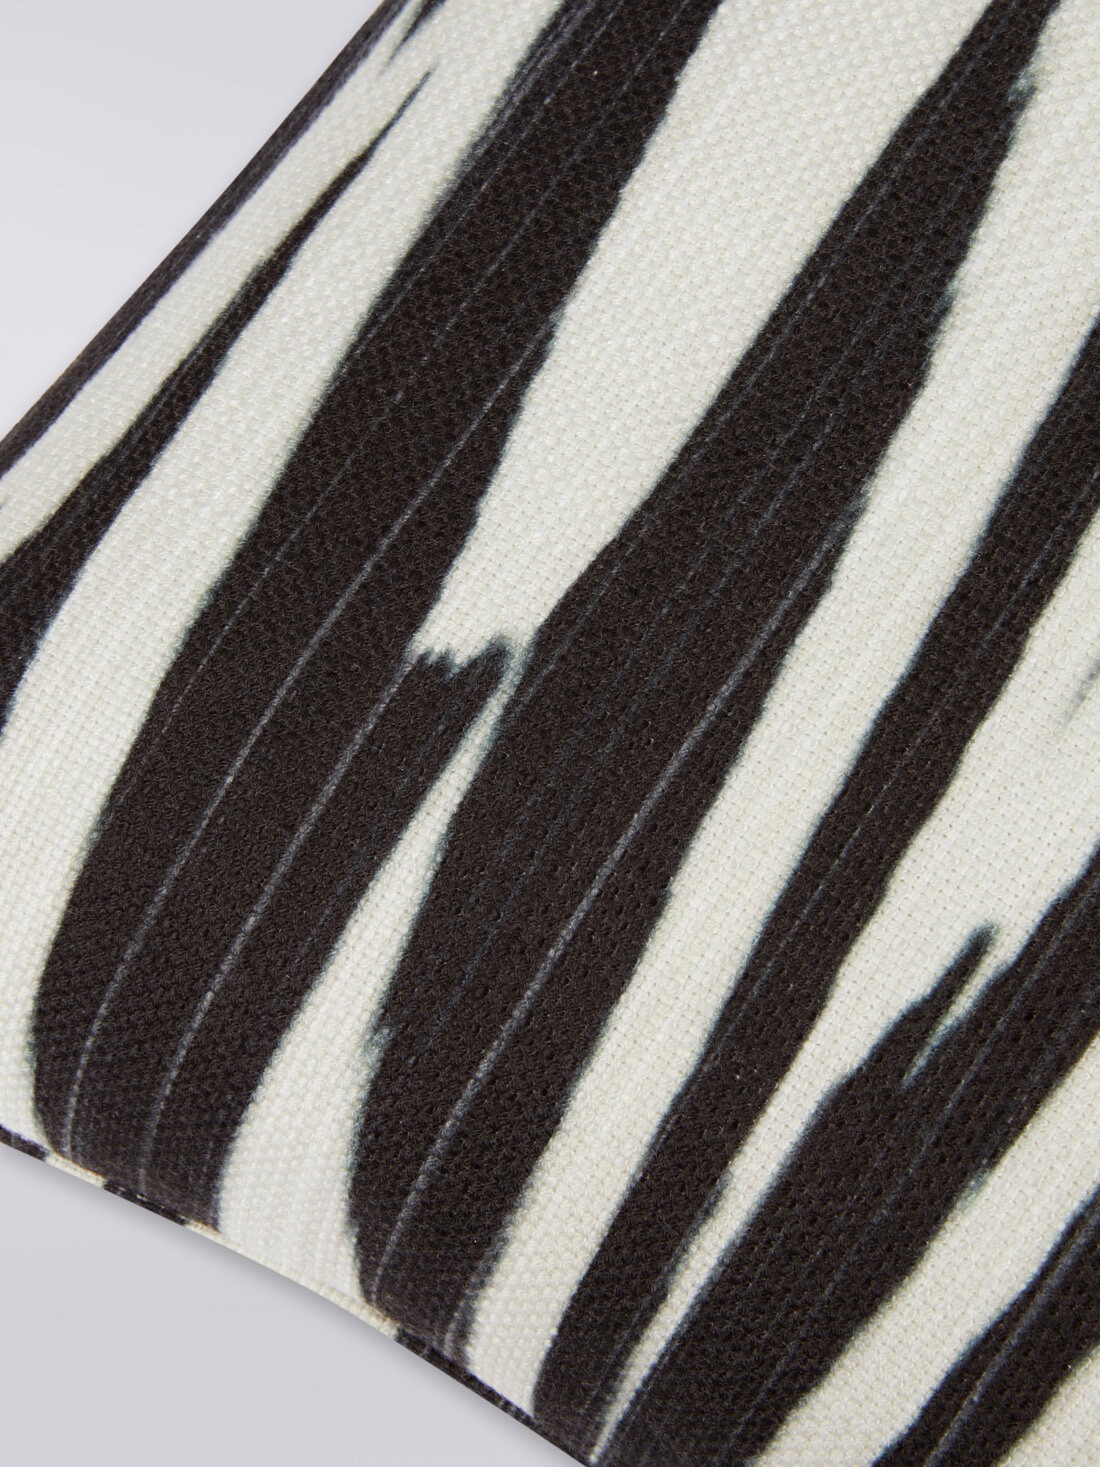 Atacama outdoor cushion 40x40 cm, Black & White - 8051275499510 - 2